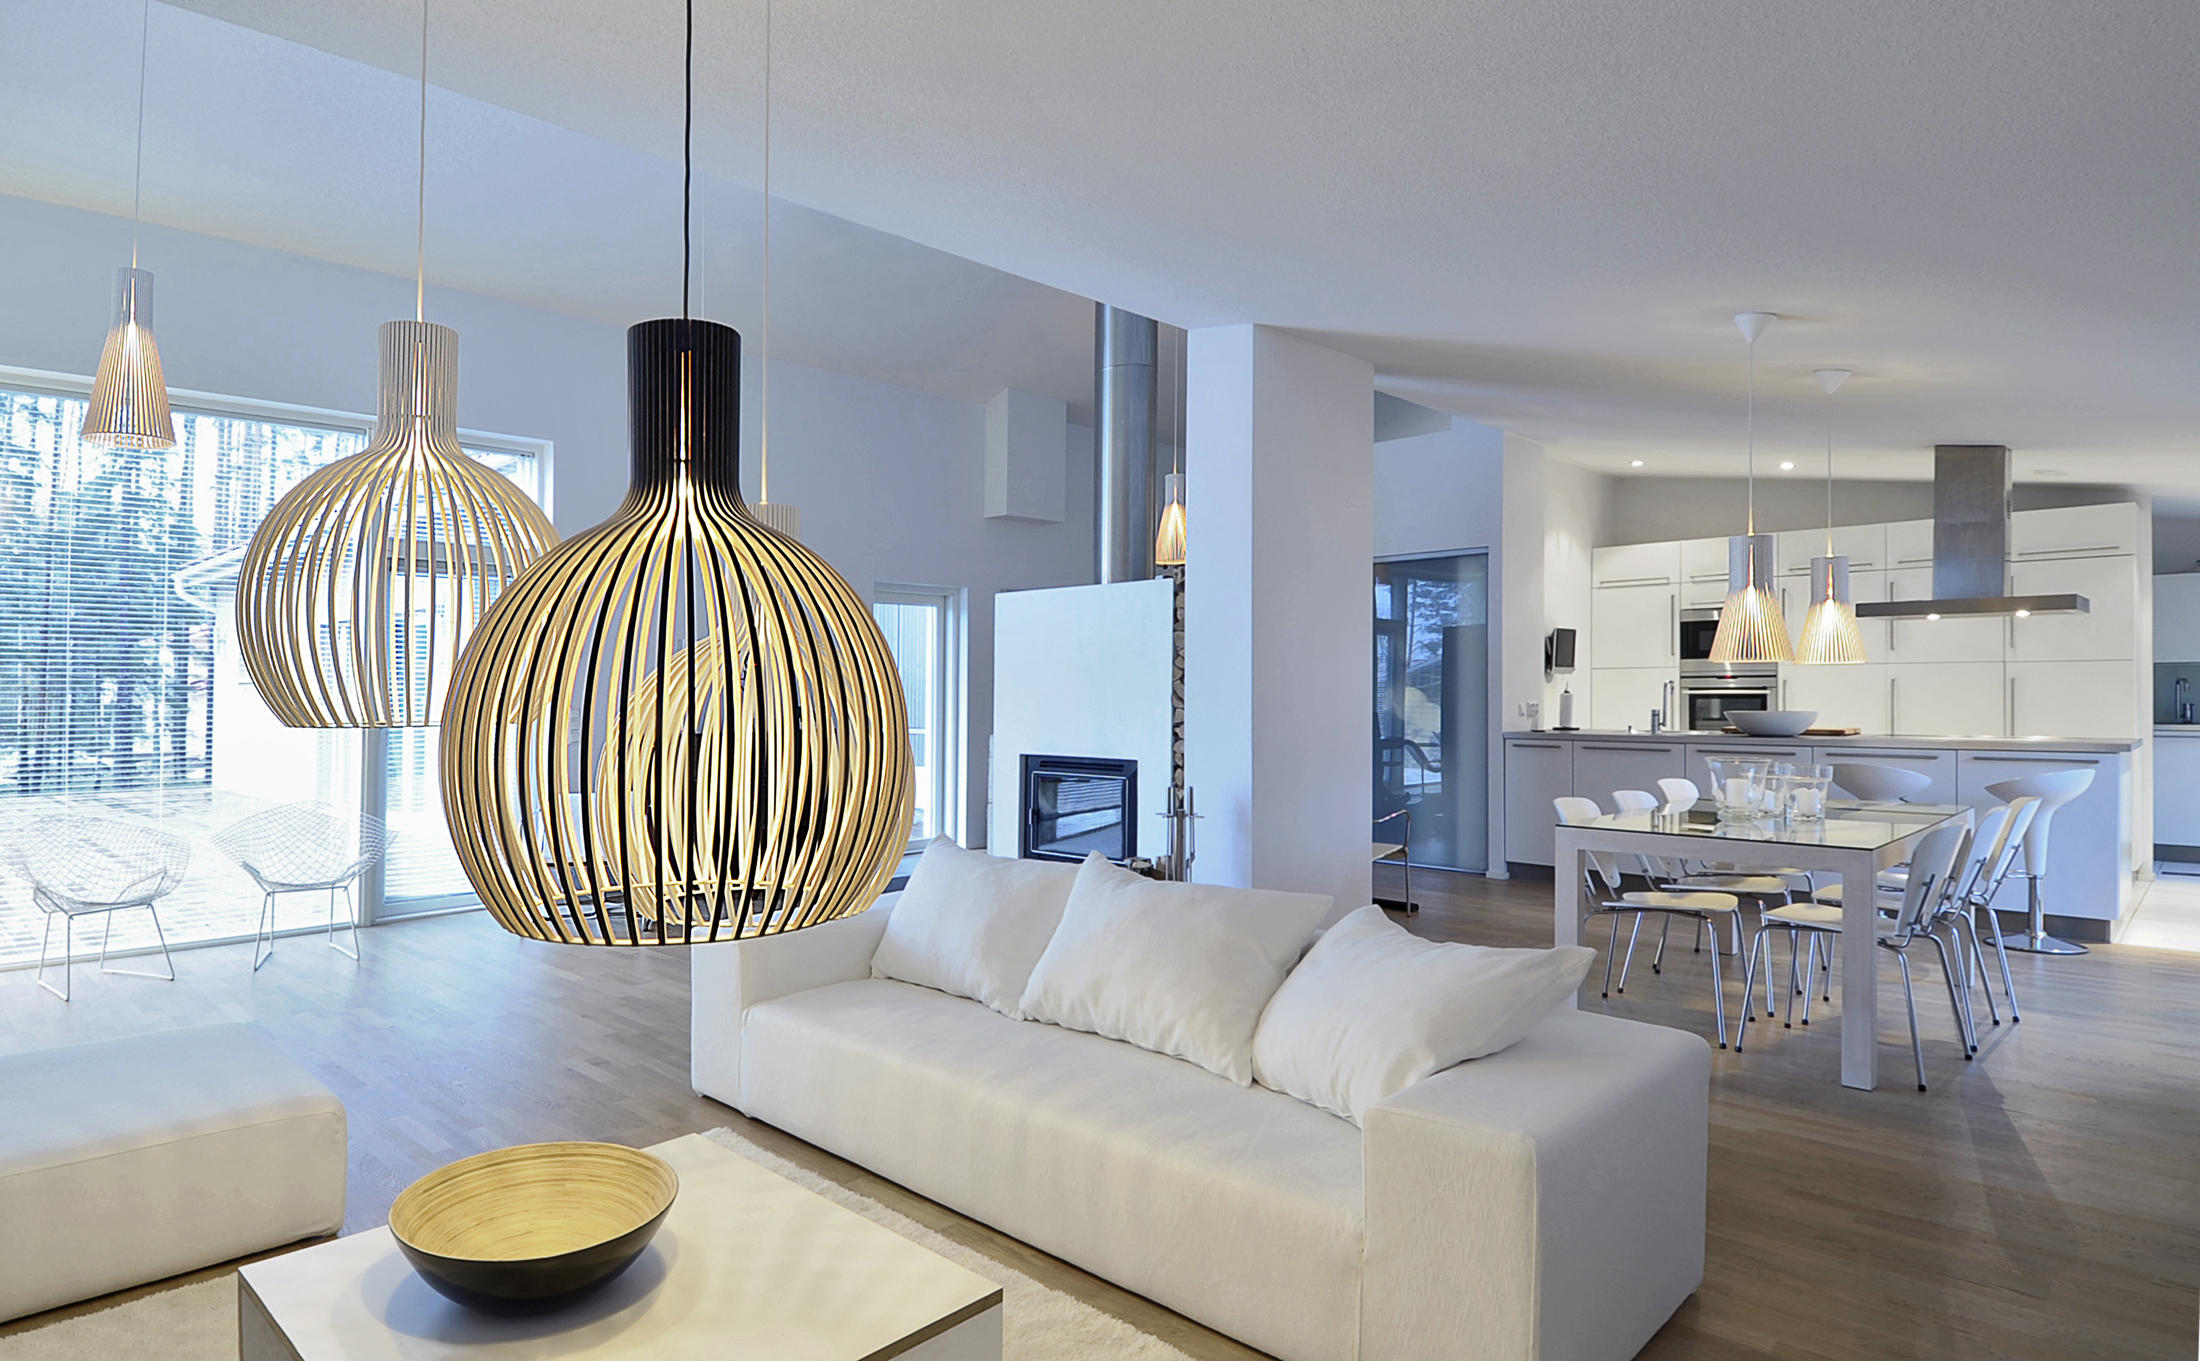 Octo 4240 pendant lamp & designer furniture | Architonic